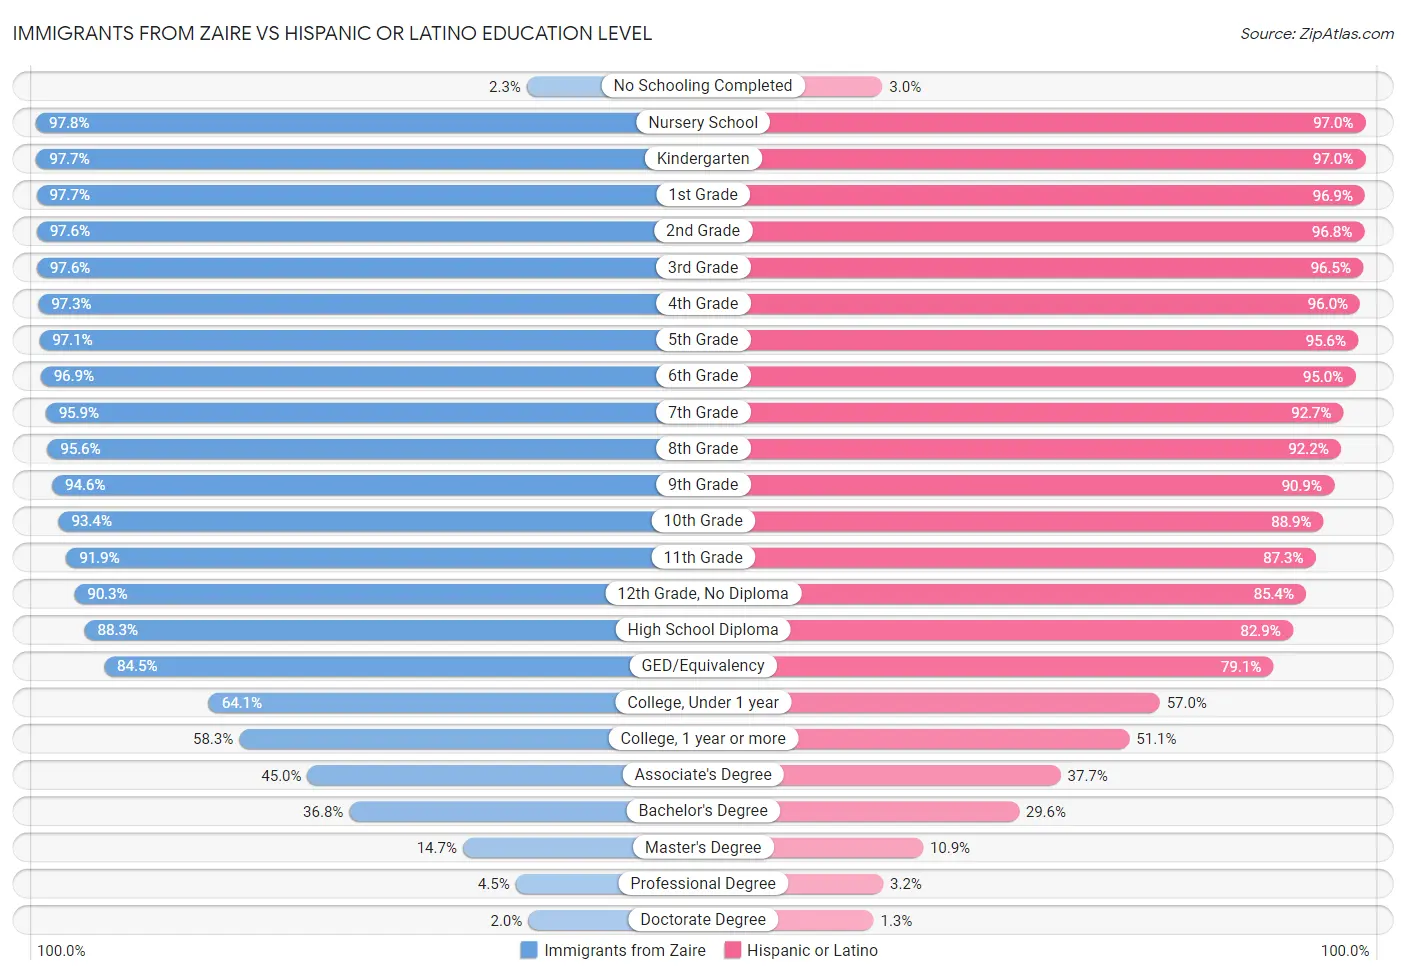 Immigrants from Zaire vs Hispanic or Latino Education Level